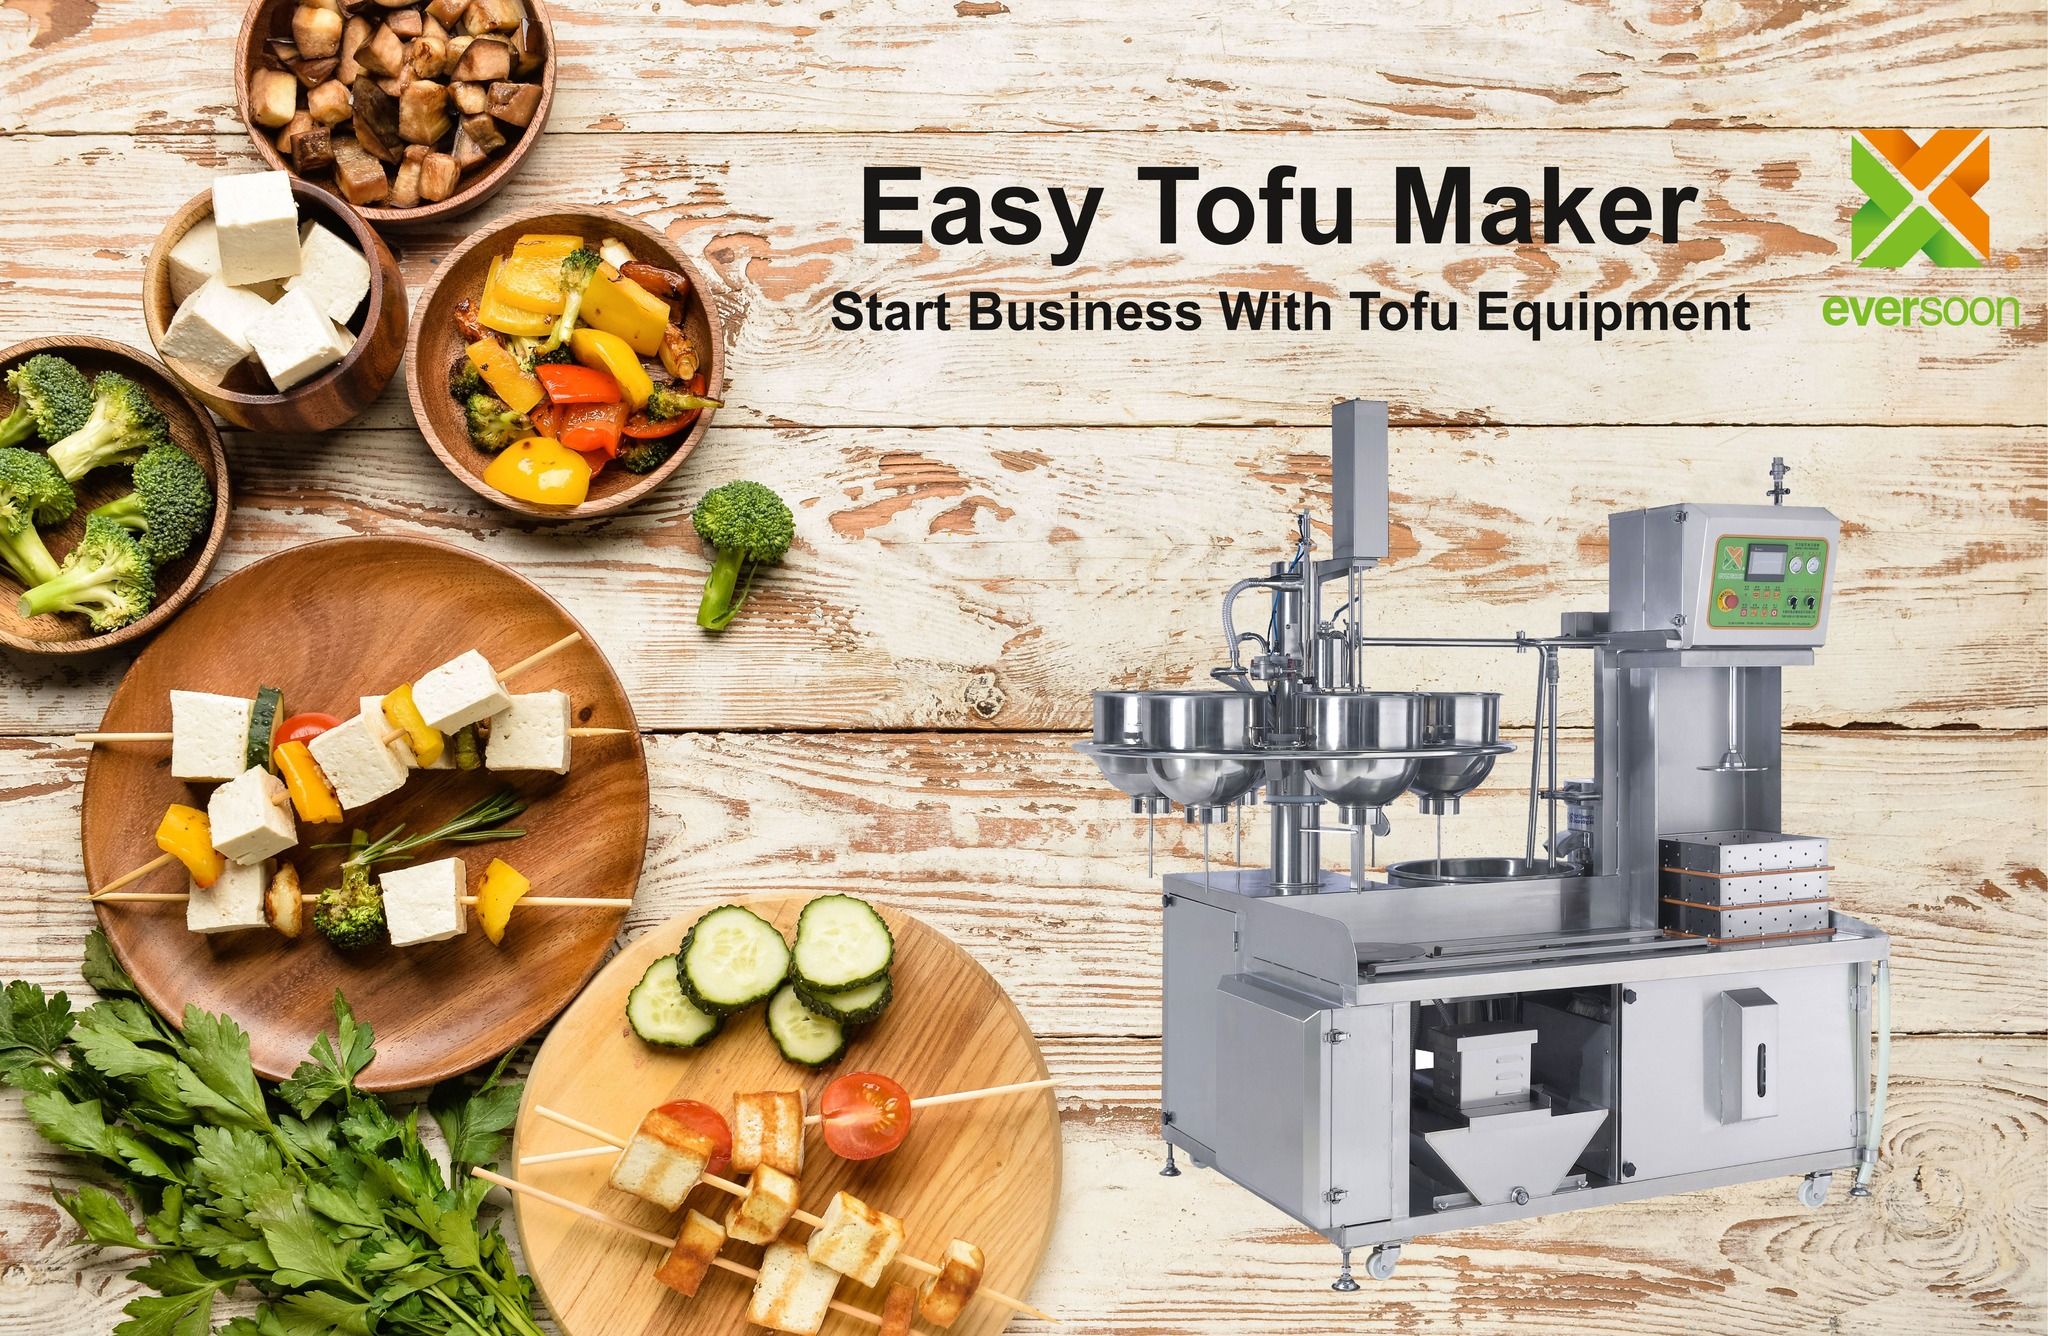 Automatische tofu-maker, Easy Tofu Maker, Gebakken Tofu Machine, Industriële tofu productie, kleine tofu machine, Soja voedsel apparatuur, soja vlees machine, sojamelk en tofu maker, tofu apparatuur, tofu machine, tofu machine te koop, tofu machine maker, tofu machine fabrikant, tofu machine prijs, Tofu machines, Tofu machines en apparatuur, Tofu Maker, tofu maker machine, Tofu maken, tofu maken apparatuur, tofu-maakmachine, tofu-maakmachineprijs, tofu-fabrikanten, Tofu-productie, tofu-productieapparatuur, tofu-fabriek, Tofu-productieapparatuur, tofu-productielijn, Tofu-productielijnprijs, tofumaker, automatische tofu machine, Veganistische Vleesmachine, Veganistische Vleesproductielijn, Groente tofu machines en apparatuur, commerciële tofu machine, Automatische sojamelkmachine, Automatische sojamelk machine, Eenvoudige Tofu Maker, productie van sojamelk, Sojadrinkmachine, sojamelk en tofu maken commerciële sojamelkmachine, sojamelk en tofu maken machine, Sojamelk kookmachine, sojamelkmachine, Sojamelkmachine gemaakt in Taiwan, Sojamelkmachines, Sojamelkmachines en apparatuur, sojamelkmaker, Sojamelk machine, sojamelk fabrikanten, Sojamelkproductie, sojamelkproductieapparatuur, Sojamelkproductielijn, sojamelkmachine prijs, sojabonenverwerkingsmachine, sojamelkmachine, sojamelk- en tofumachine, commerciële sojamelkmaker, commerciële sojamelkmachine, commerciële sojamelkmachine, sojamelkmachine commercieel, Sojamelk ketel voor zakelijk gebruik, Sojamelk molen voor zakelijk gebruik, Sojamelkmachine voor zakelijk gebruik, sojamelkmachines voor zakelijk gebruik, winkel sojamelk productieapparatuur